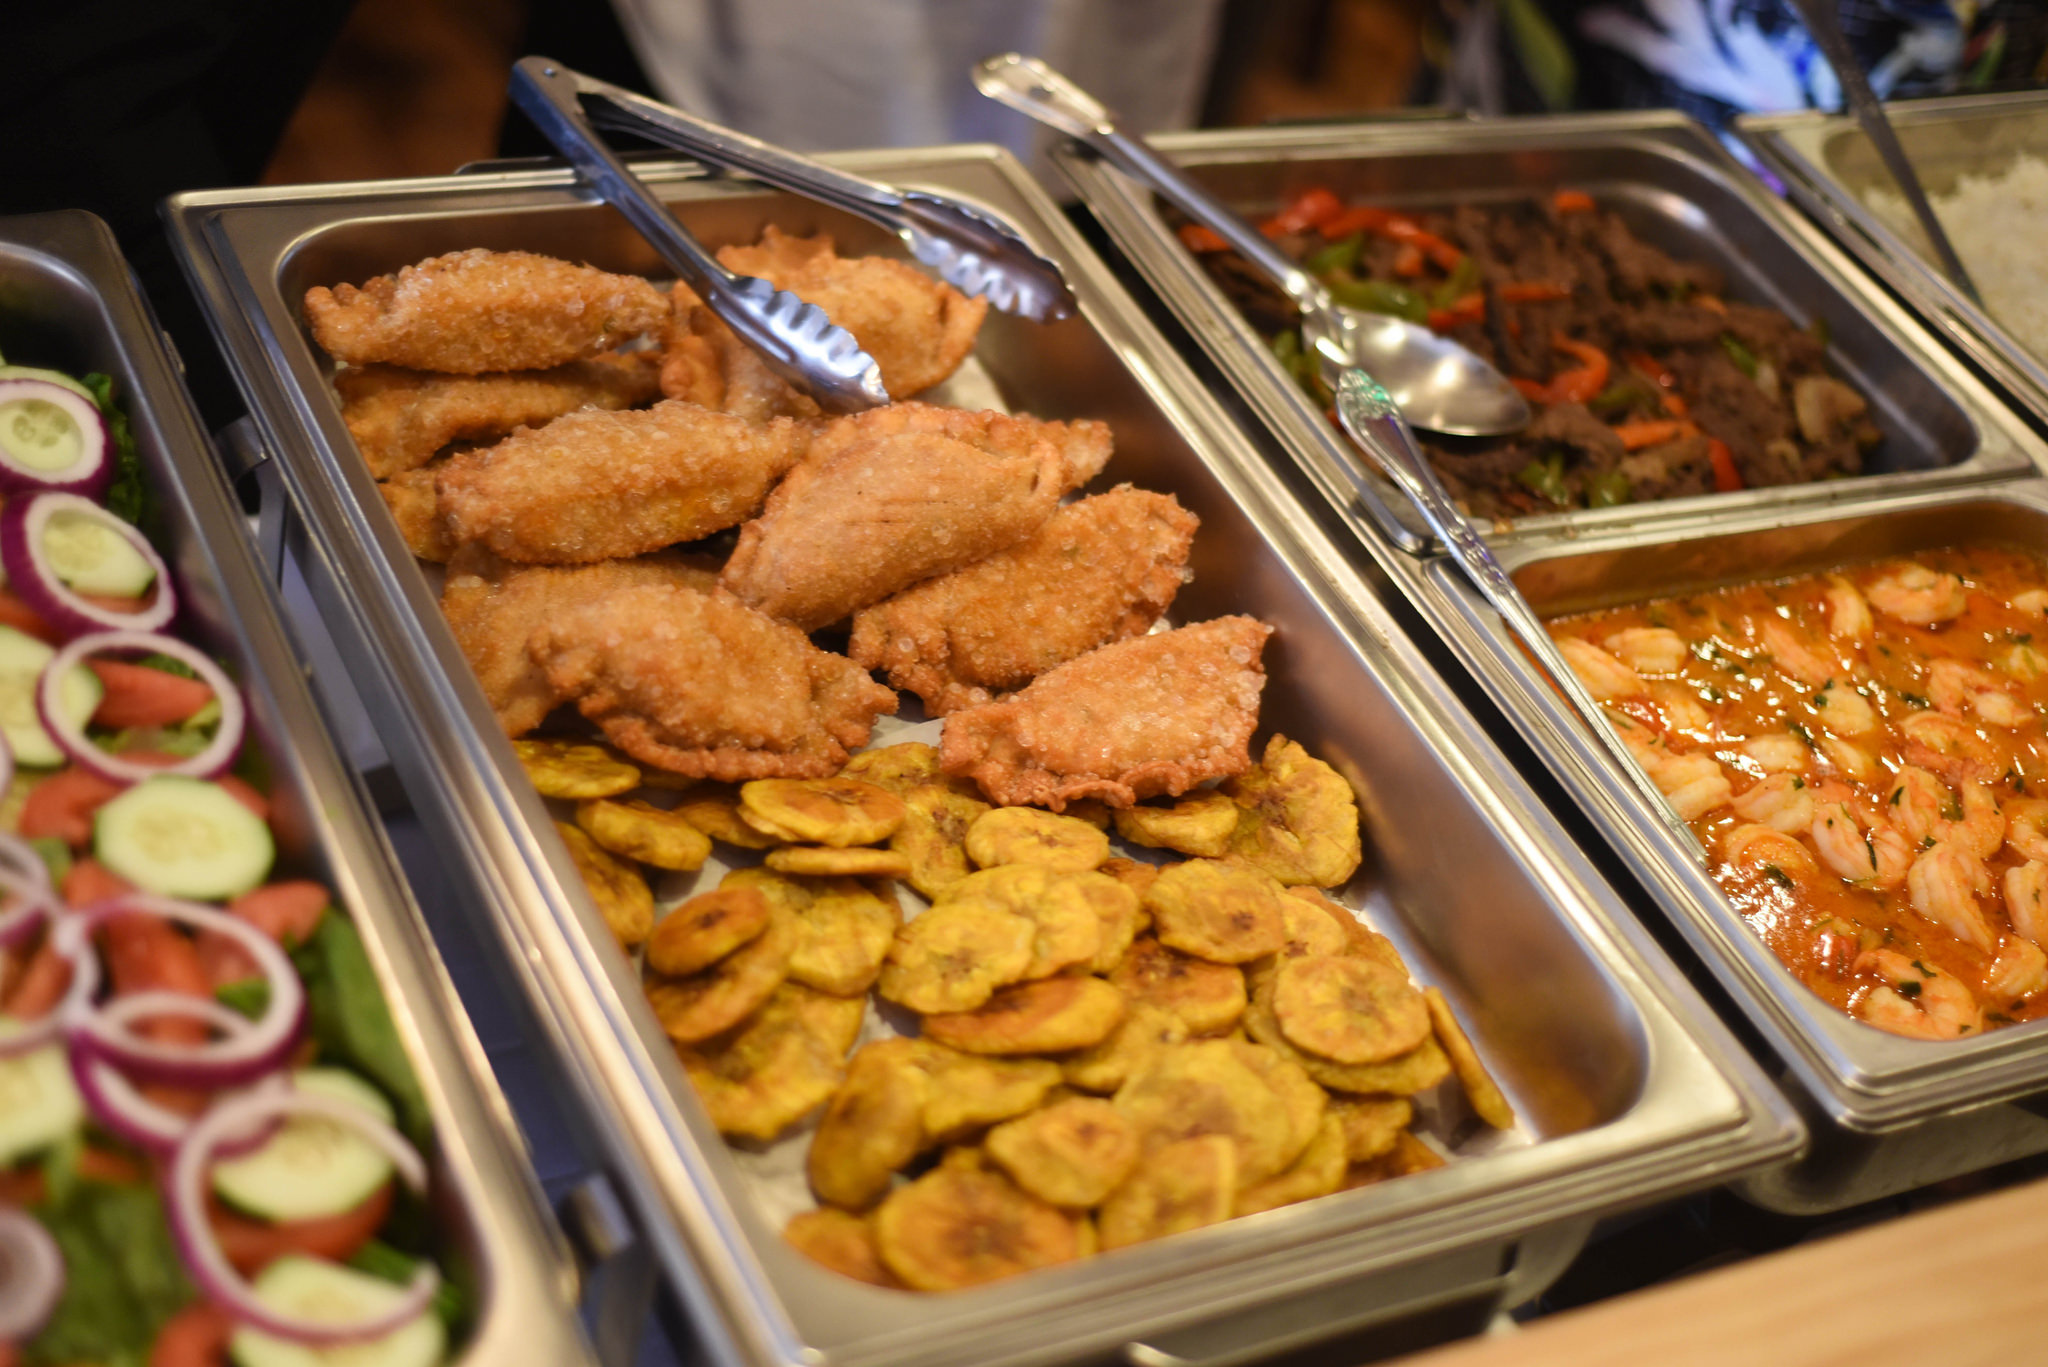 A tray of food, including empanadas, at Buccann.